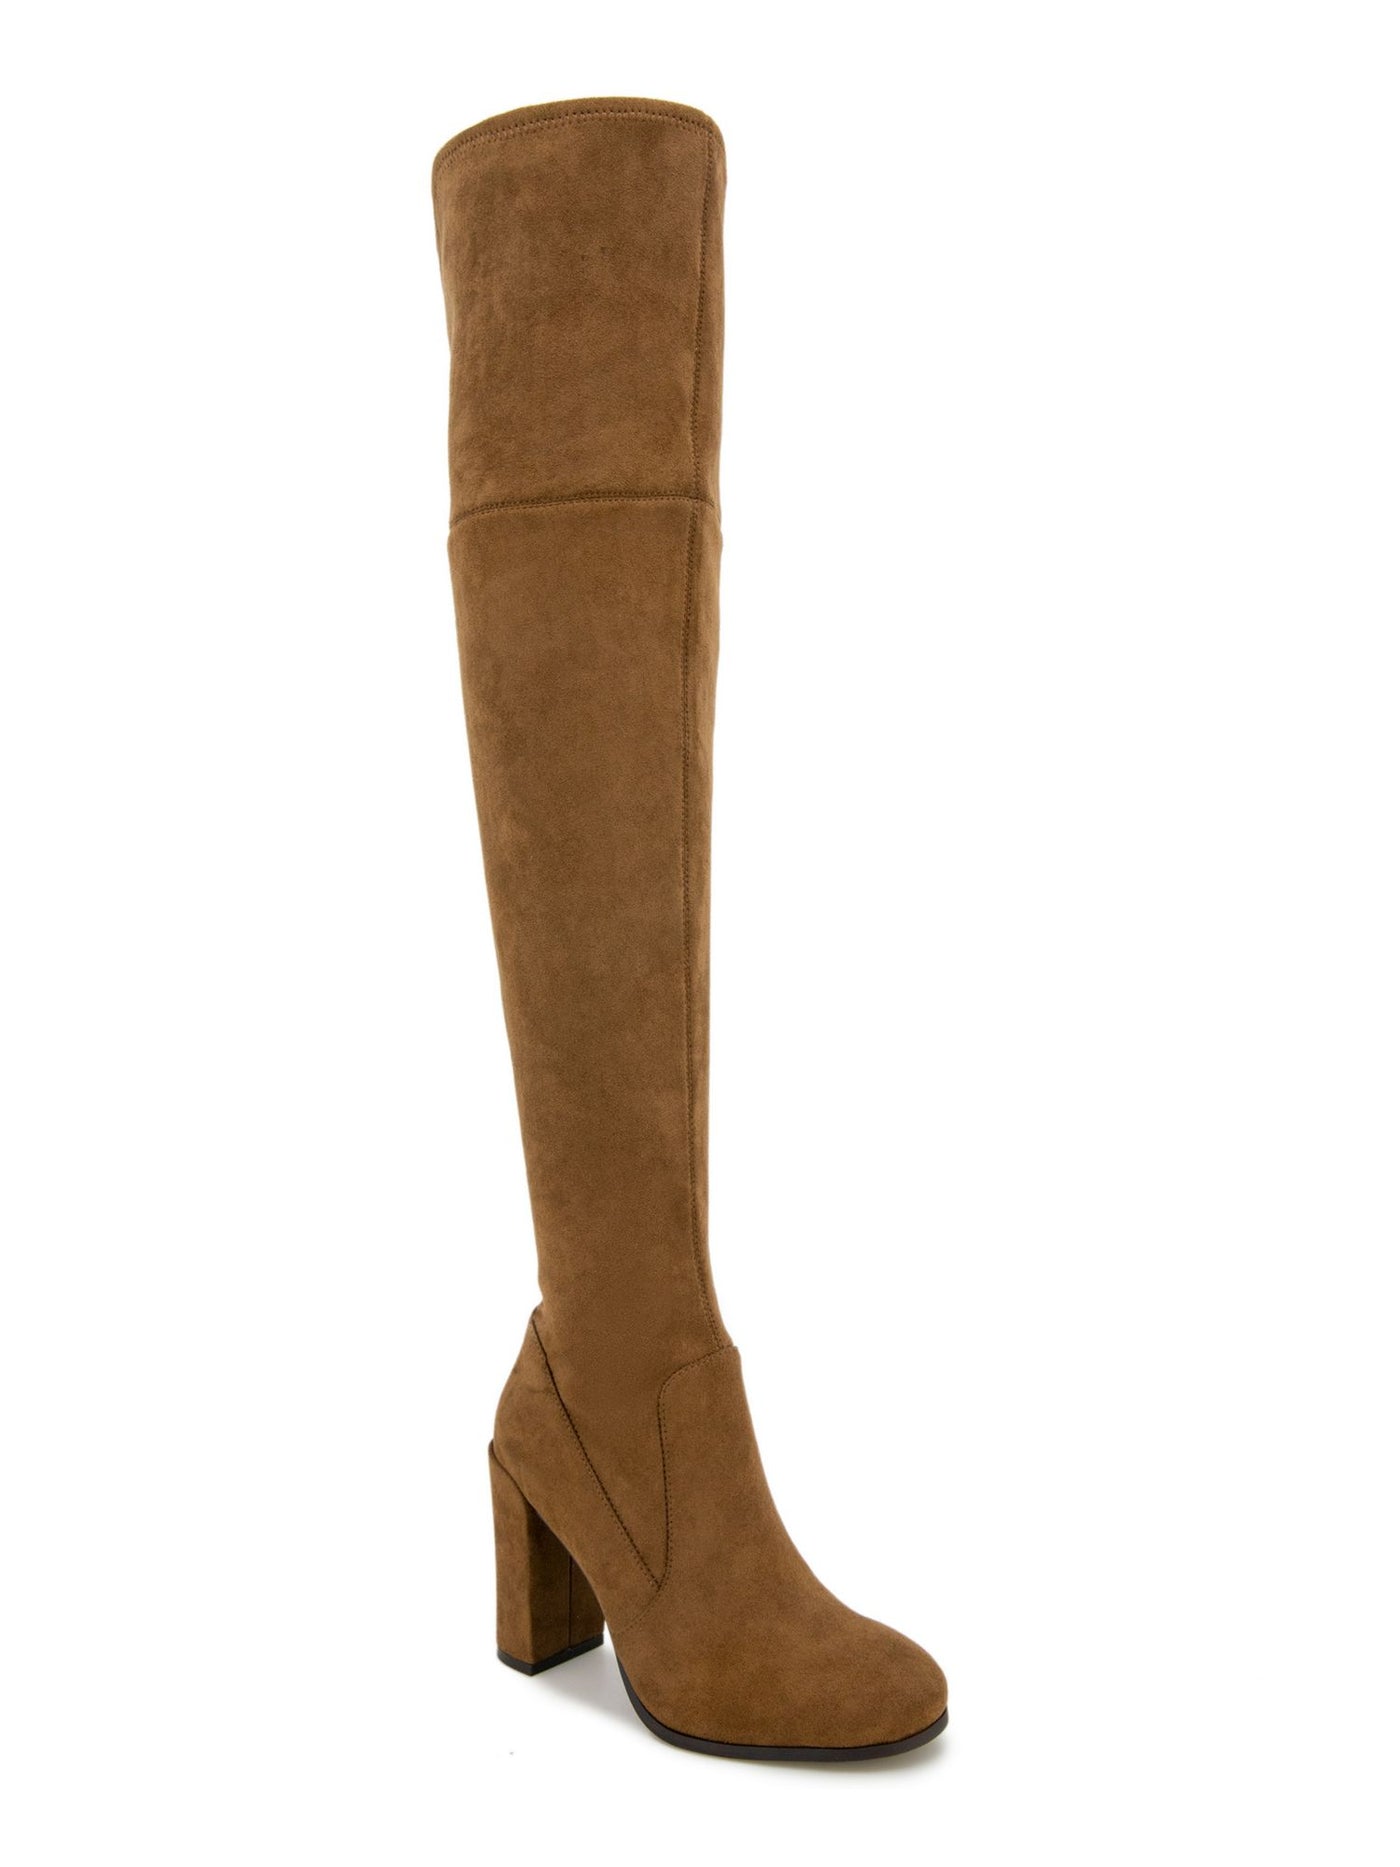 KENNETH COLE NEW YORK Womens Brown Inside Half Zip Justin Round Toe Block Heel Dress Boots 9.5 M